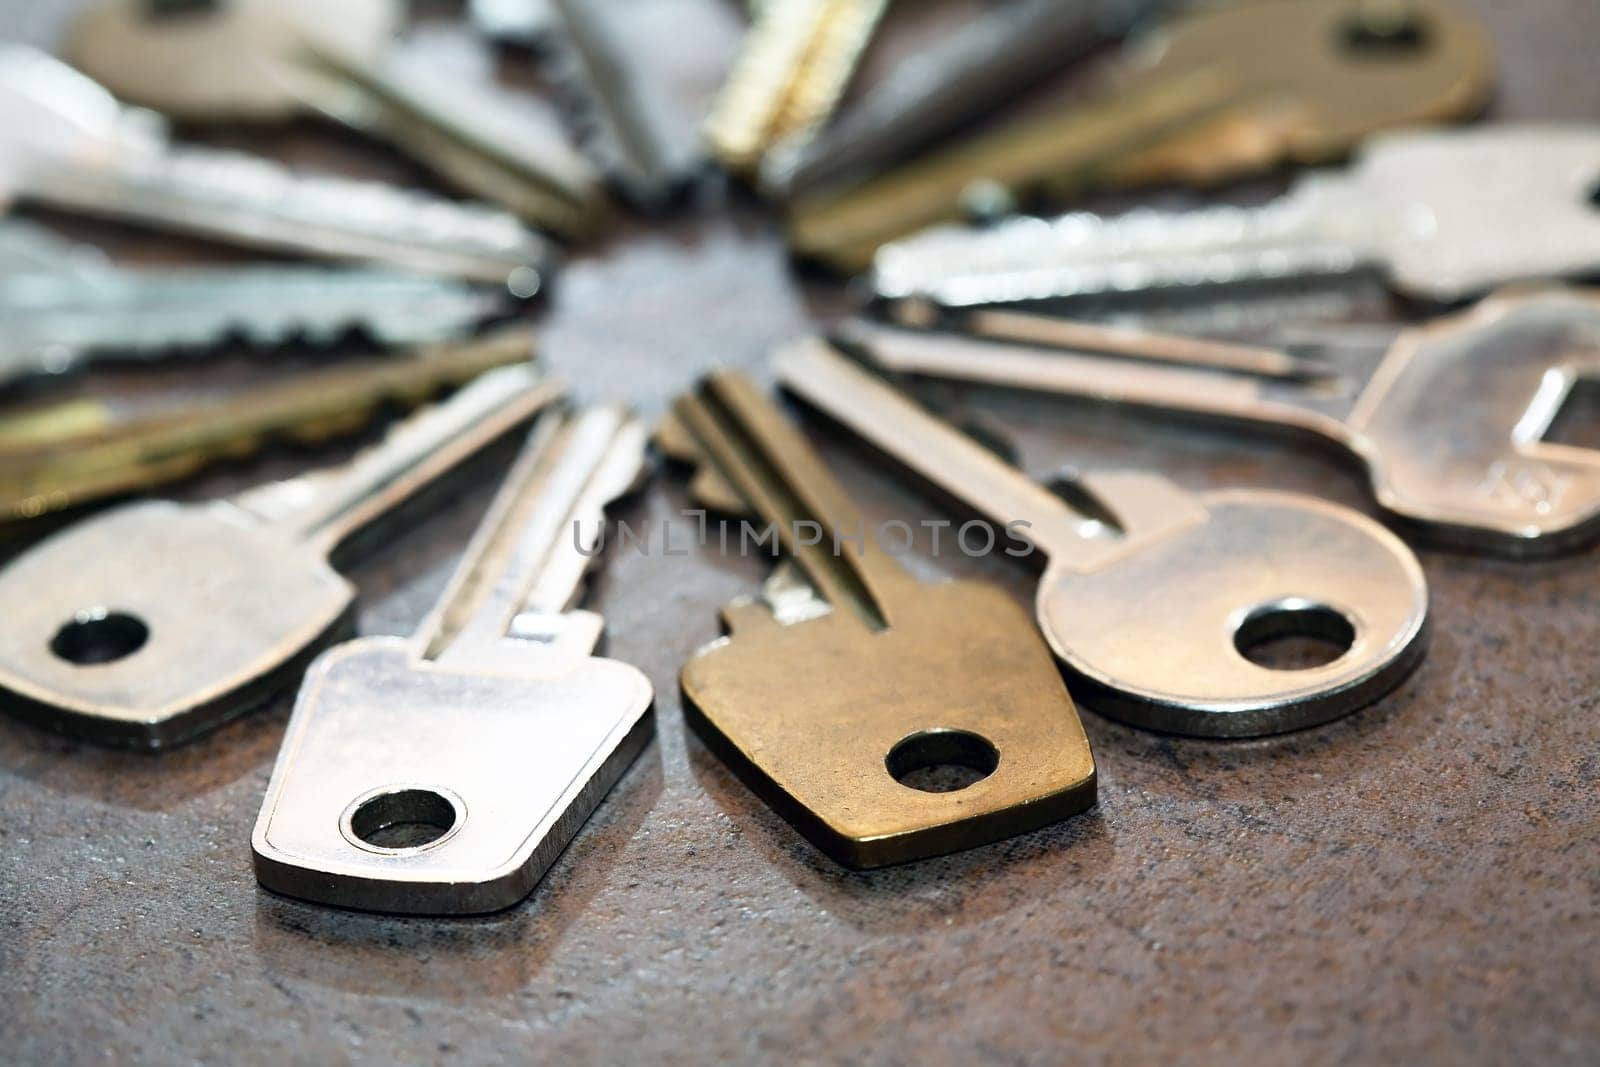 Set of various old keys closeup on rough surface